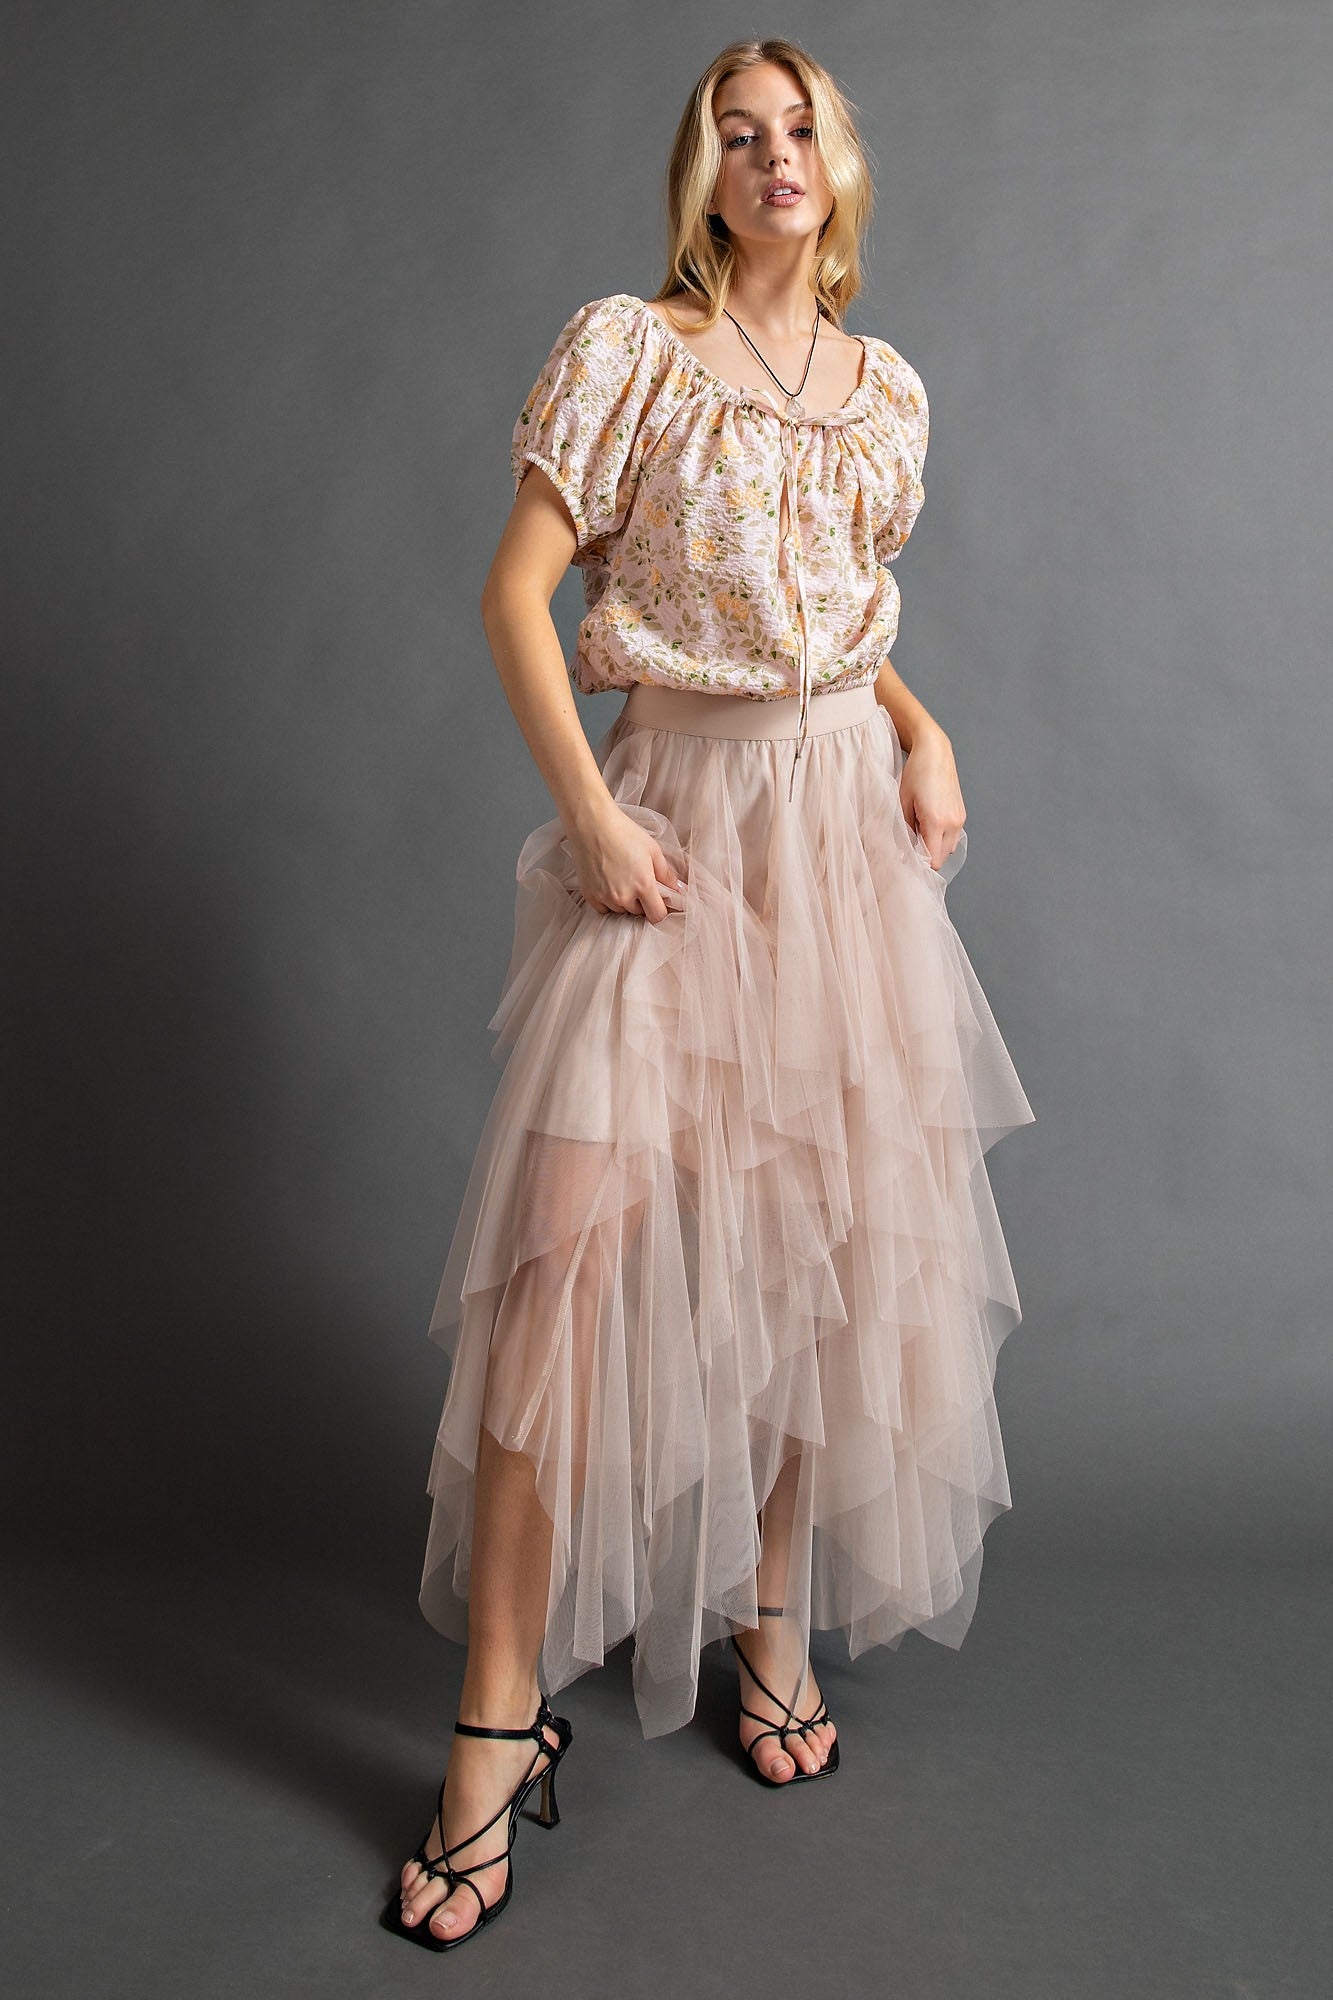 Fairy mech ballerina skirt